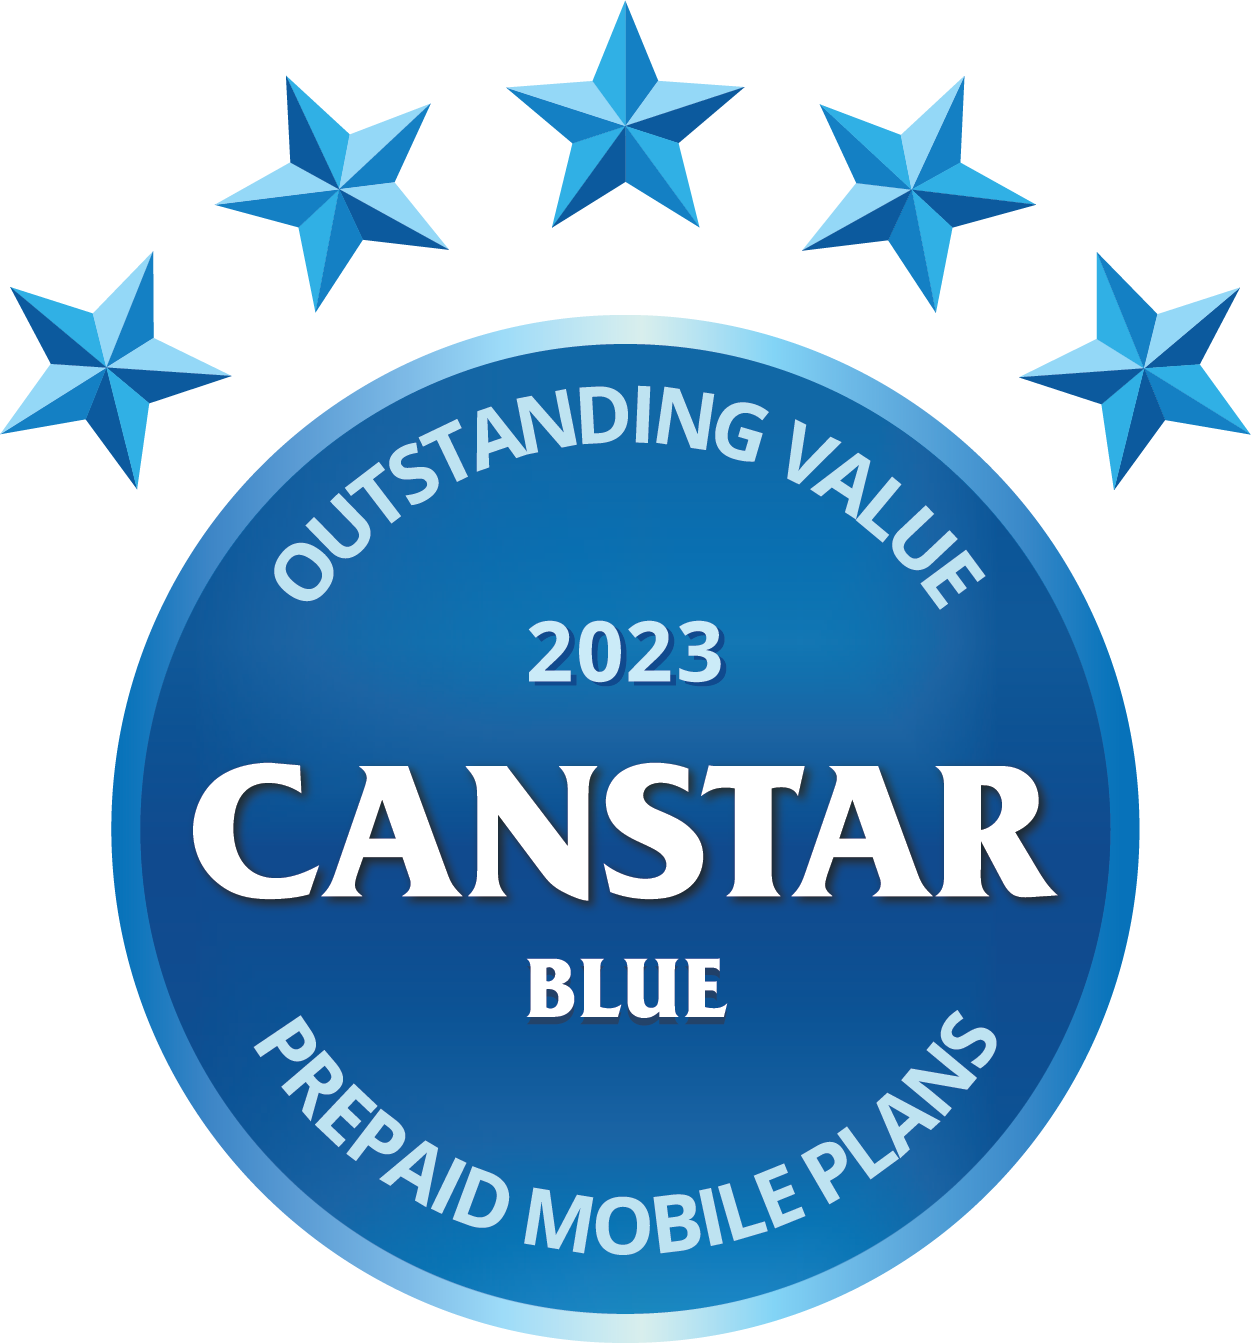 Canstar award 2023